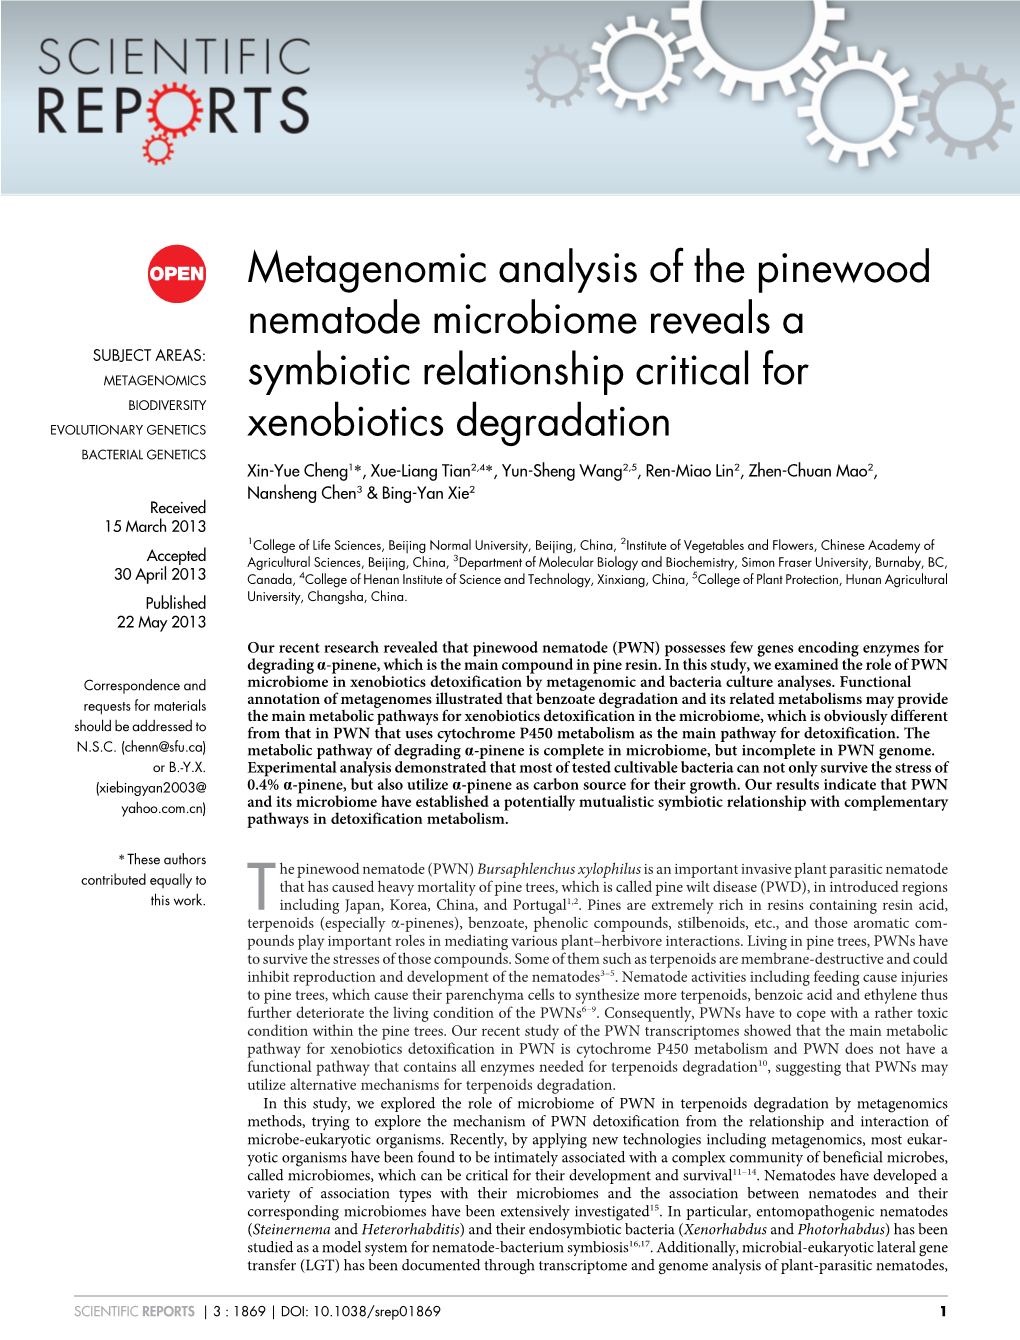 Metagenomic Analysis of the Pinewood Nematode Microbiome